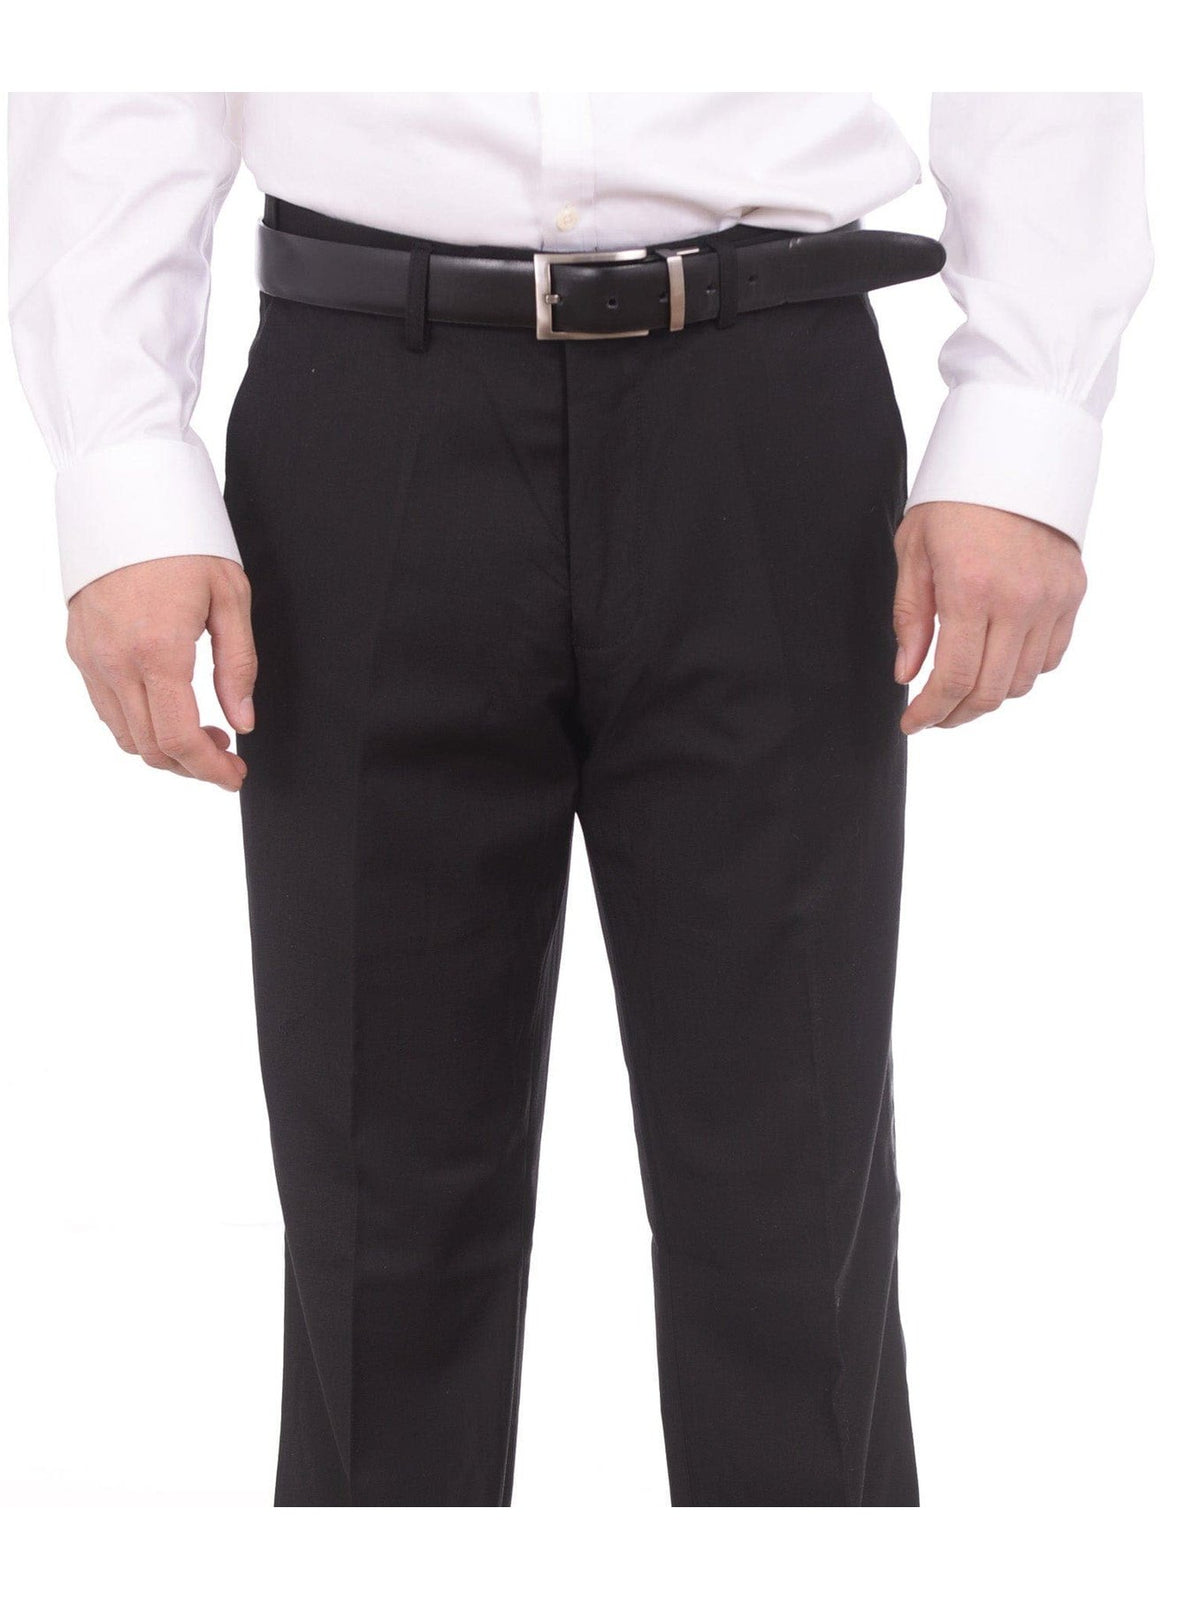 Braveman TUXEDOS Braveman Slim Fit Solid Black Two Button Tuxedo Suit With Satin Lapel